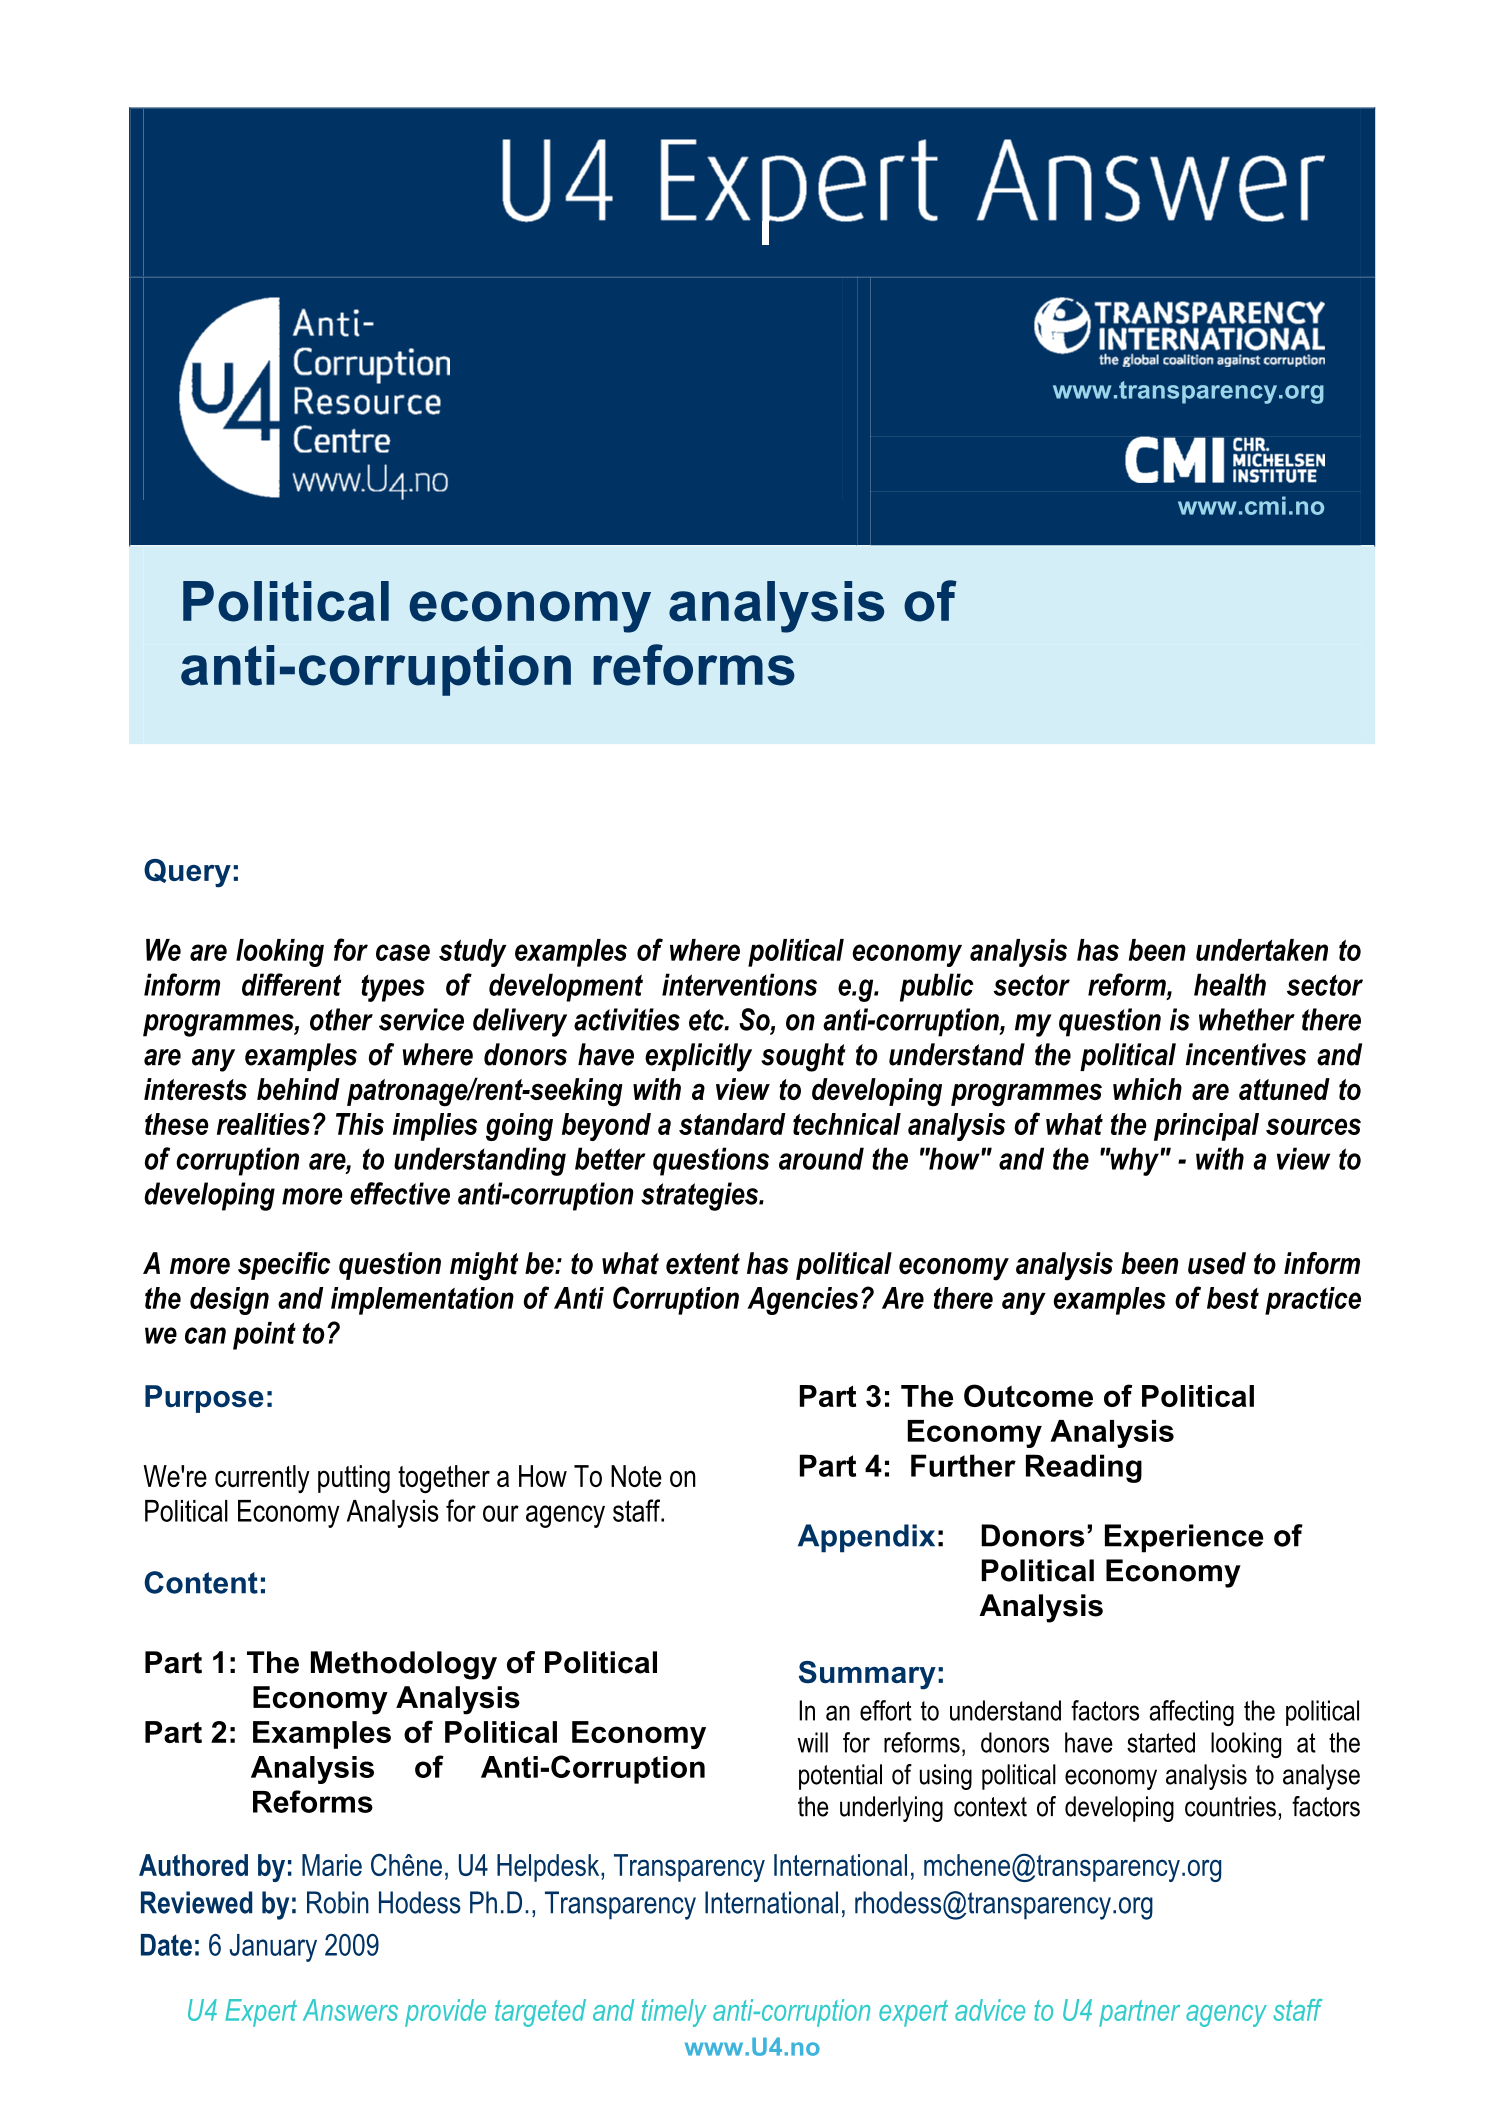 Political economy analysis of anti-corruption reforms